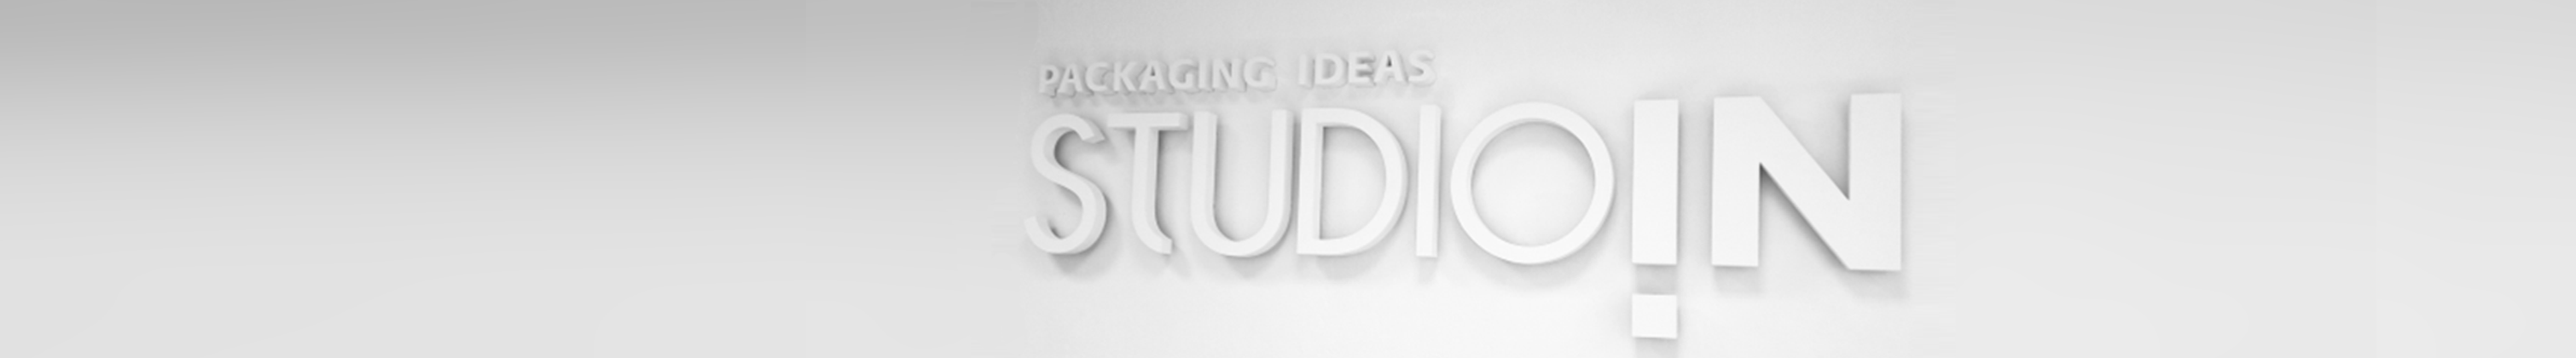 STUDIOIN packaging ideas's profile banner